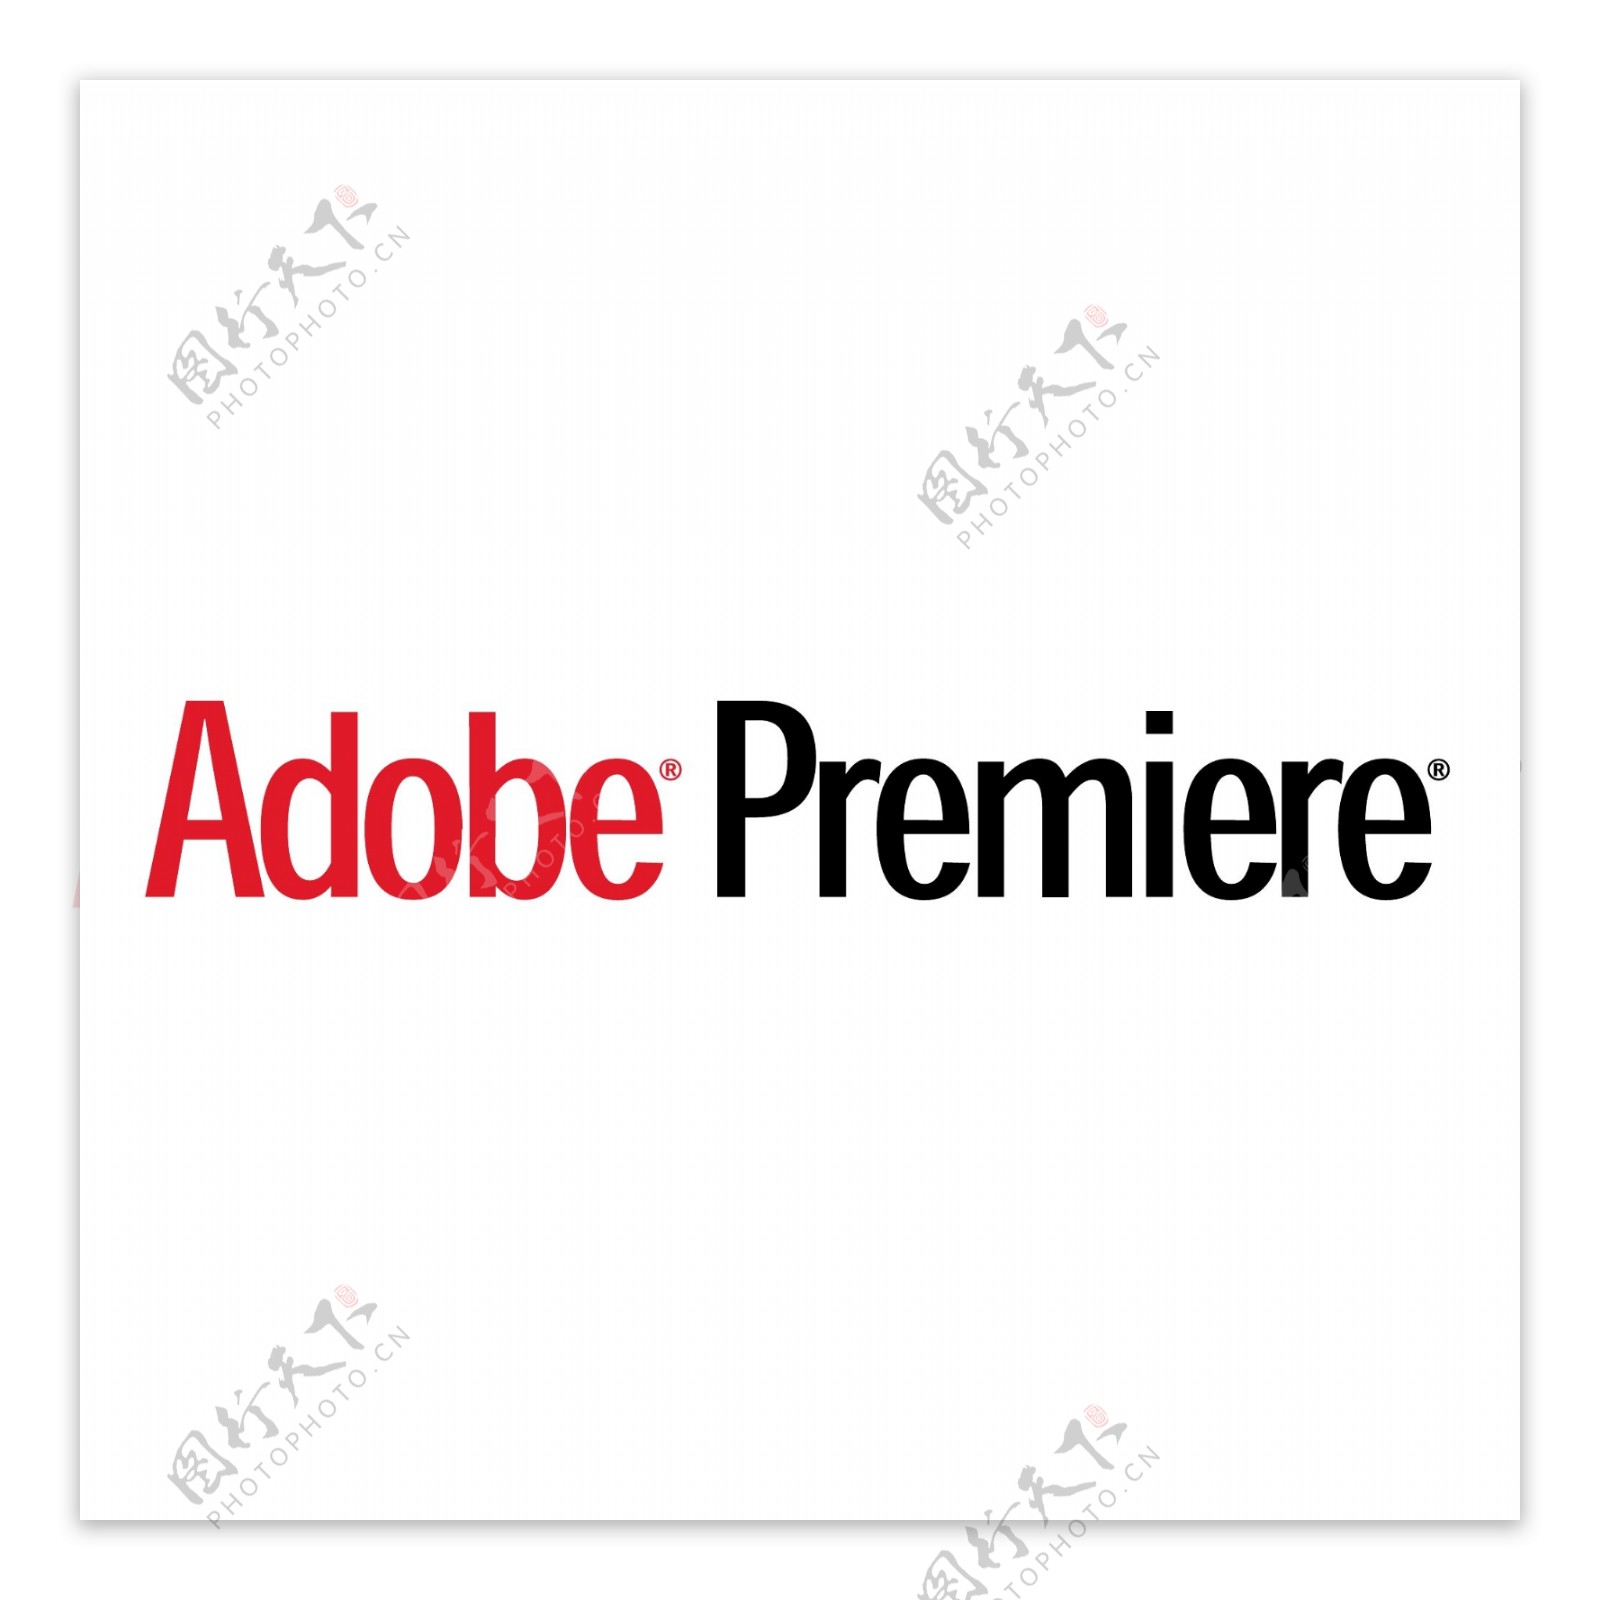 AdobePremiere